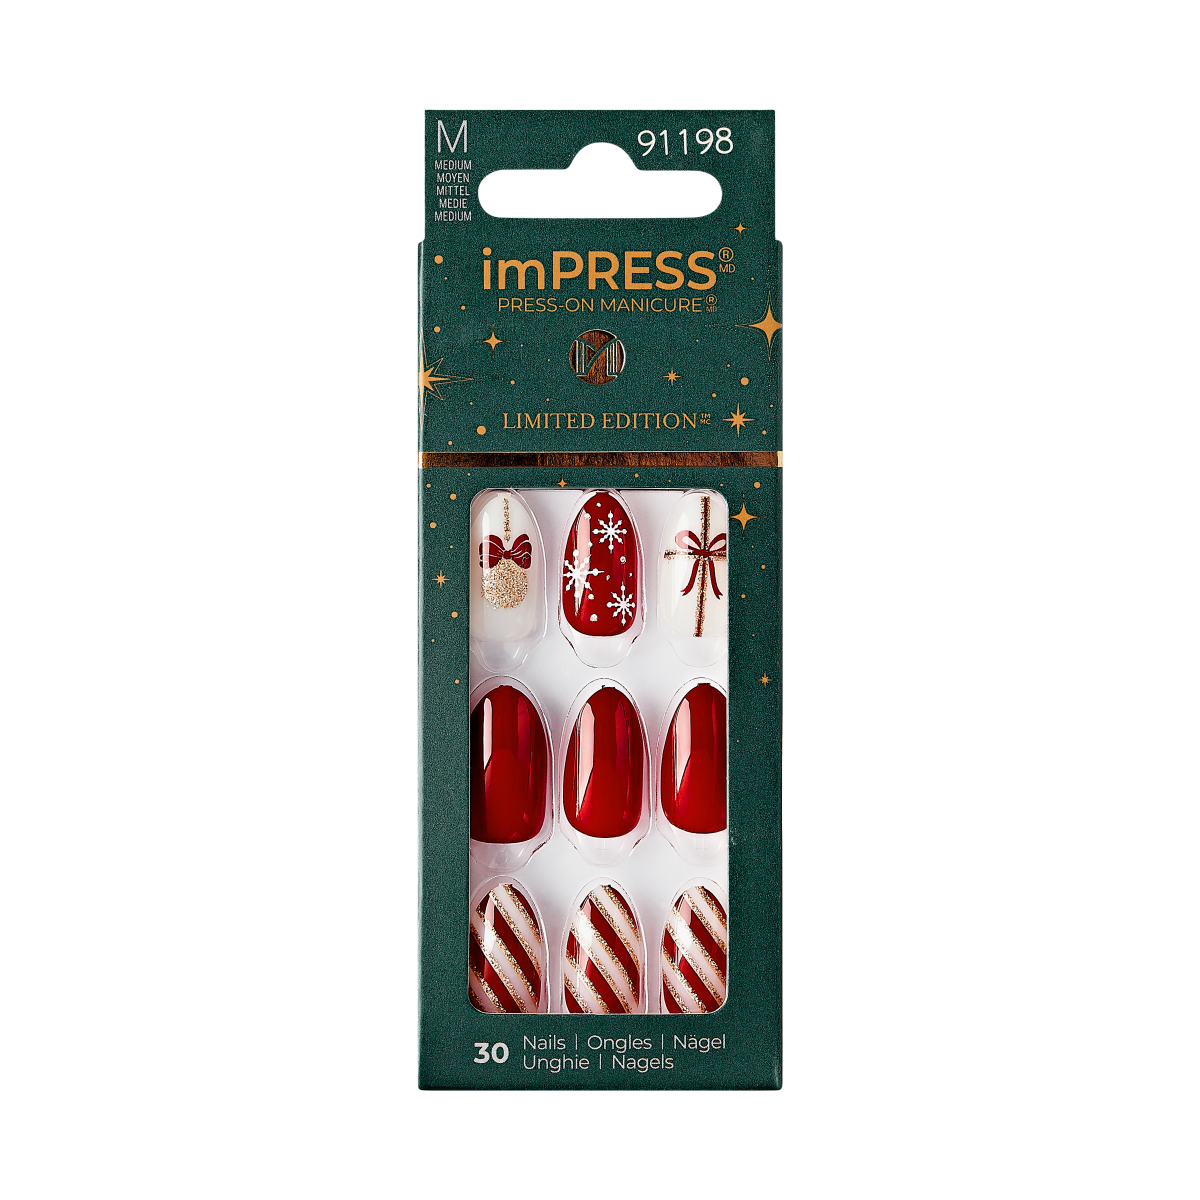 imPRESS Holiday Press-On Manicure - White Night